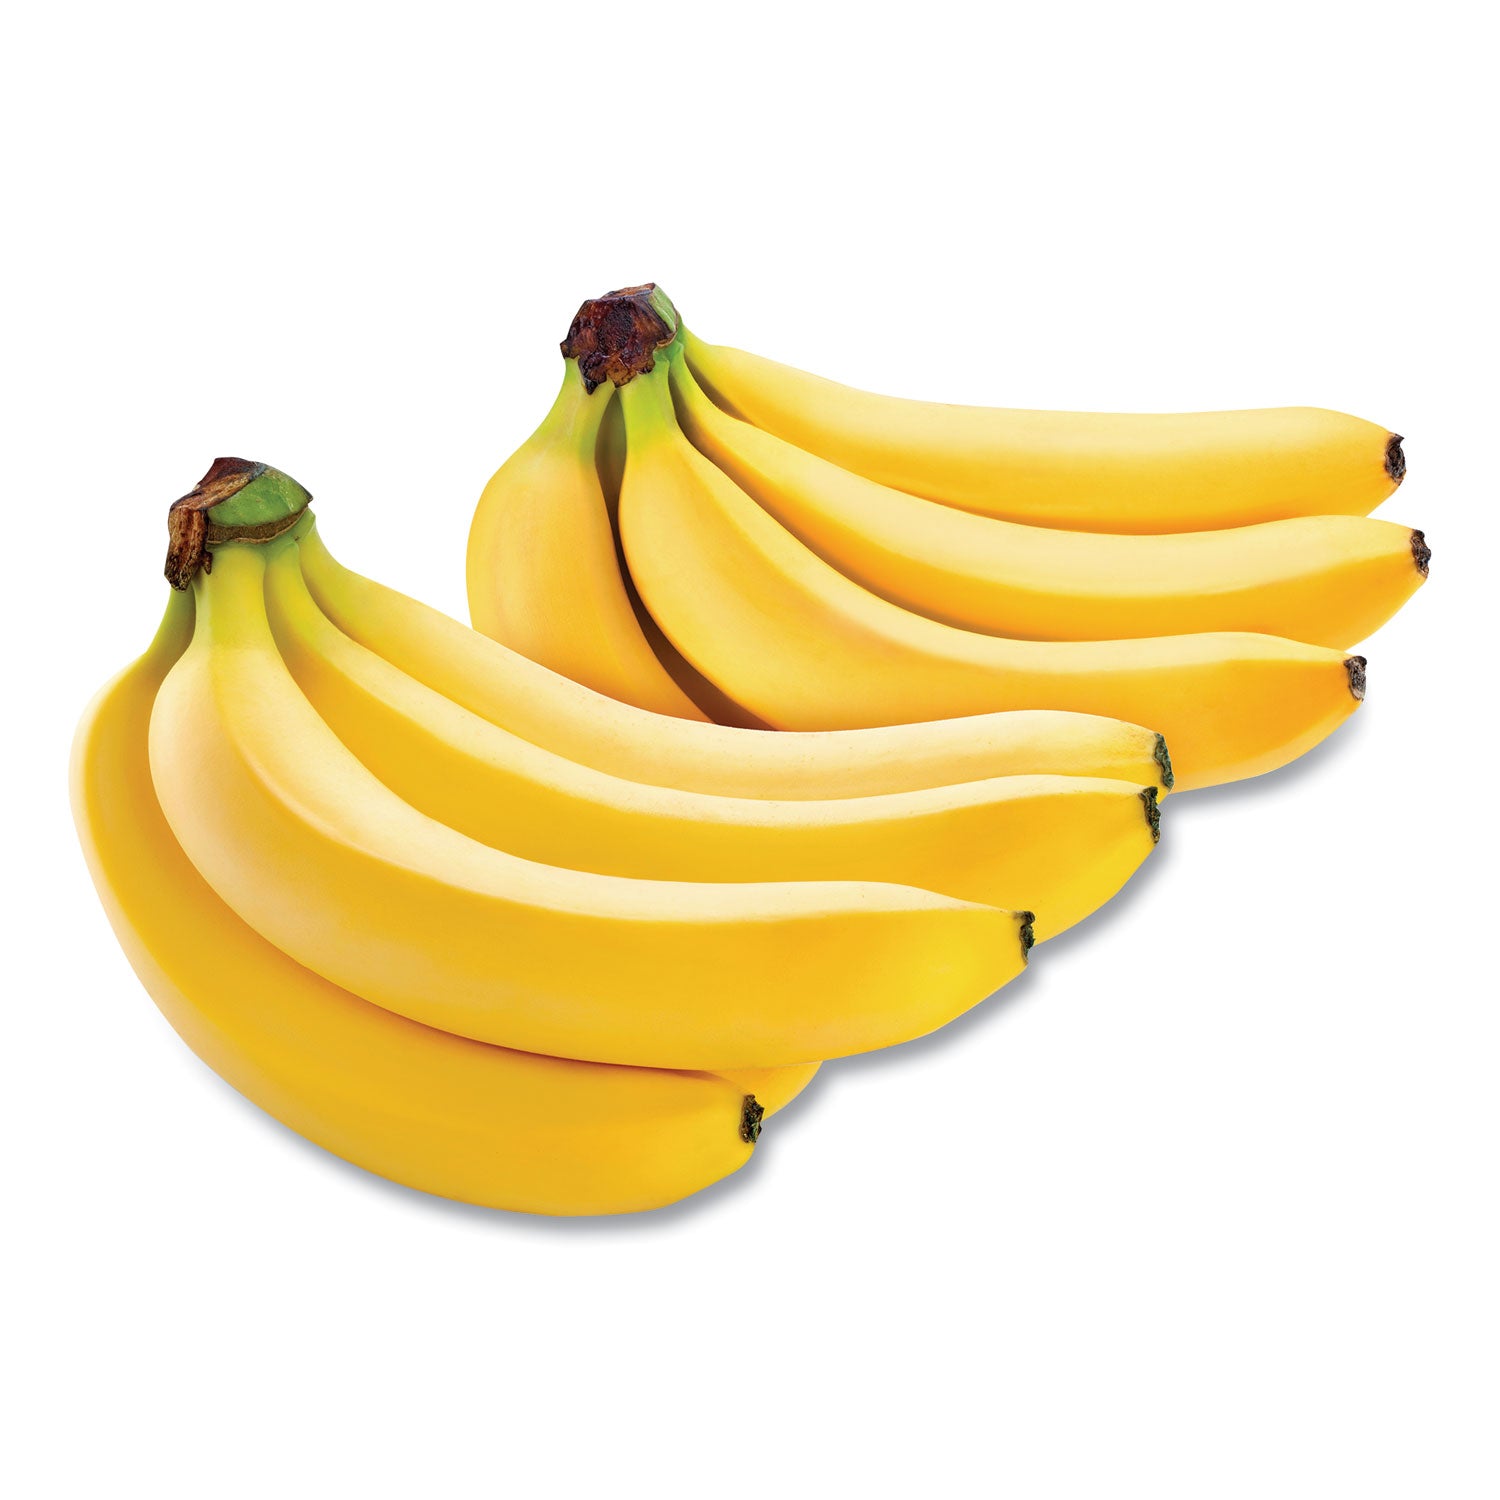 fresh-organic-bananas-6-lbs-2-bundles-carton-ships-in-1-3-business-days_grr90000107 - 1